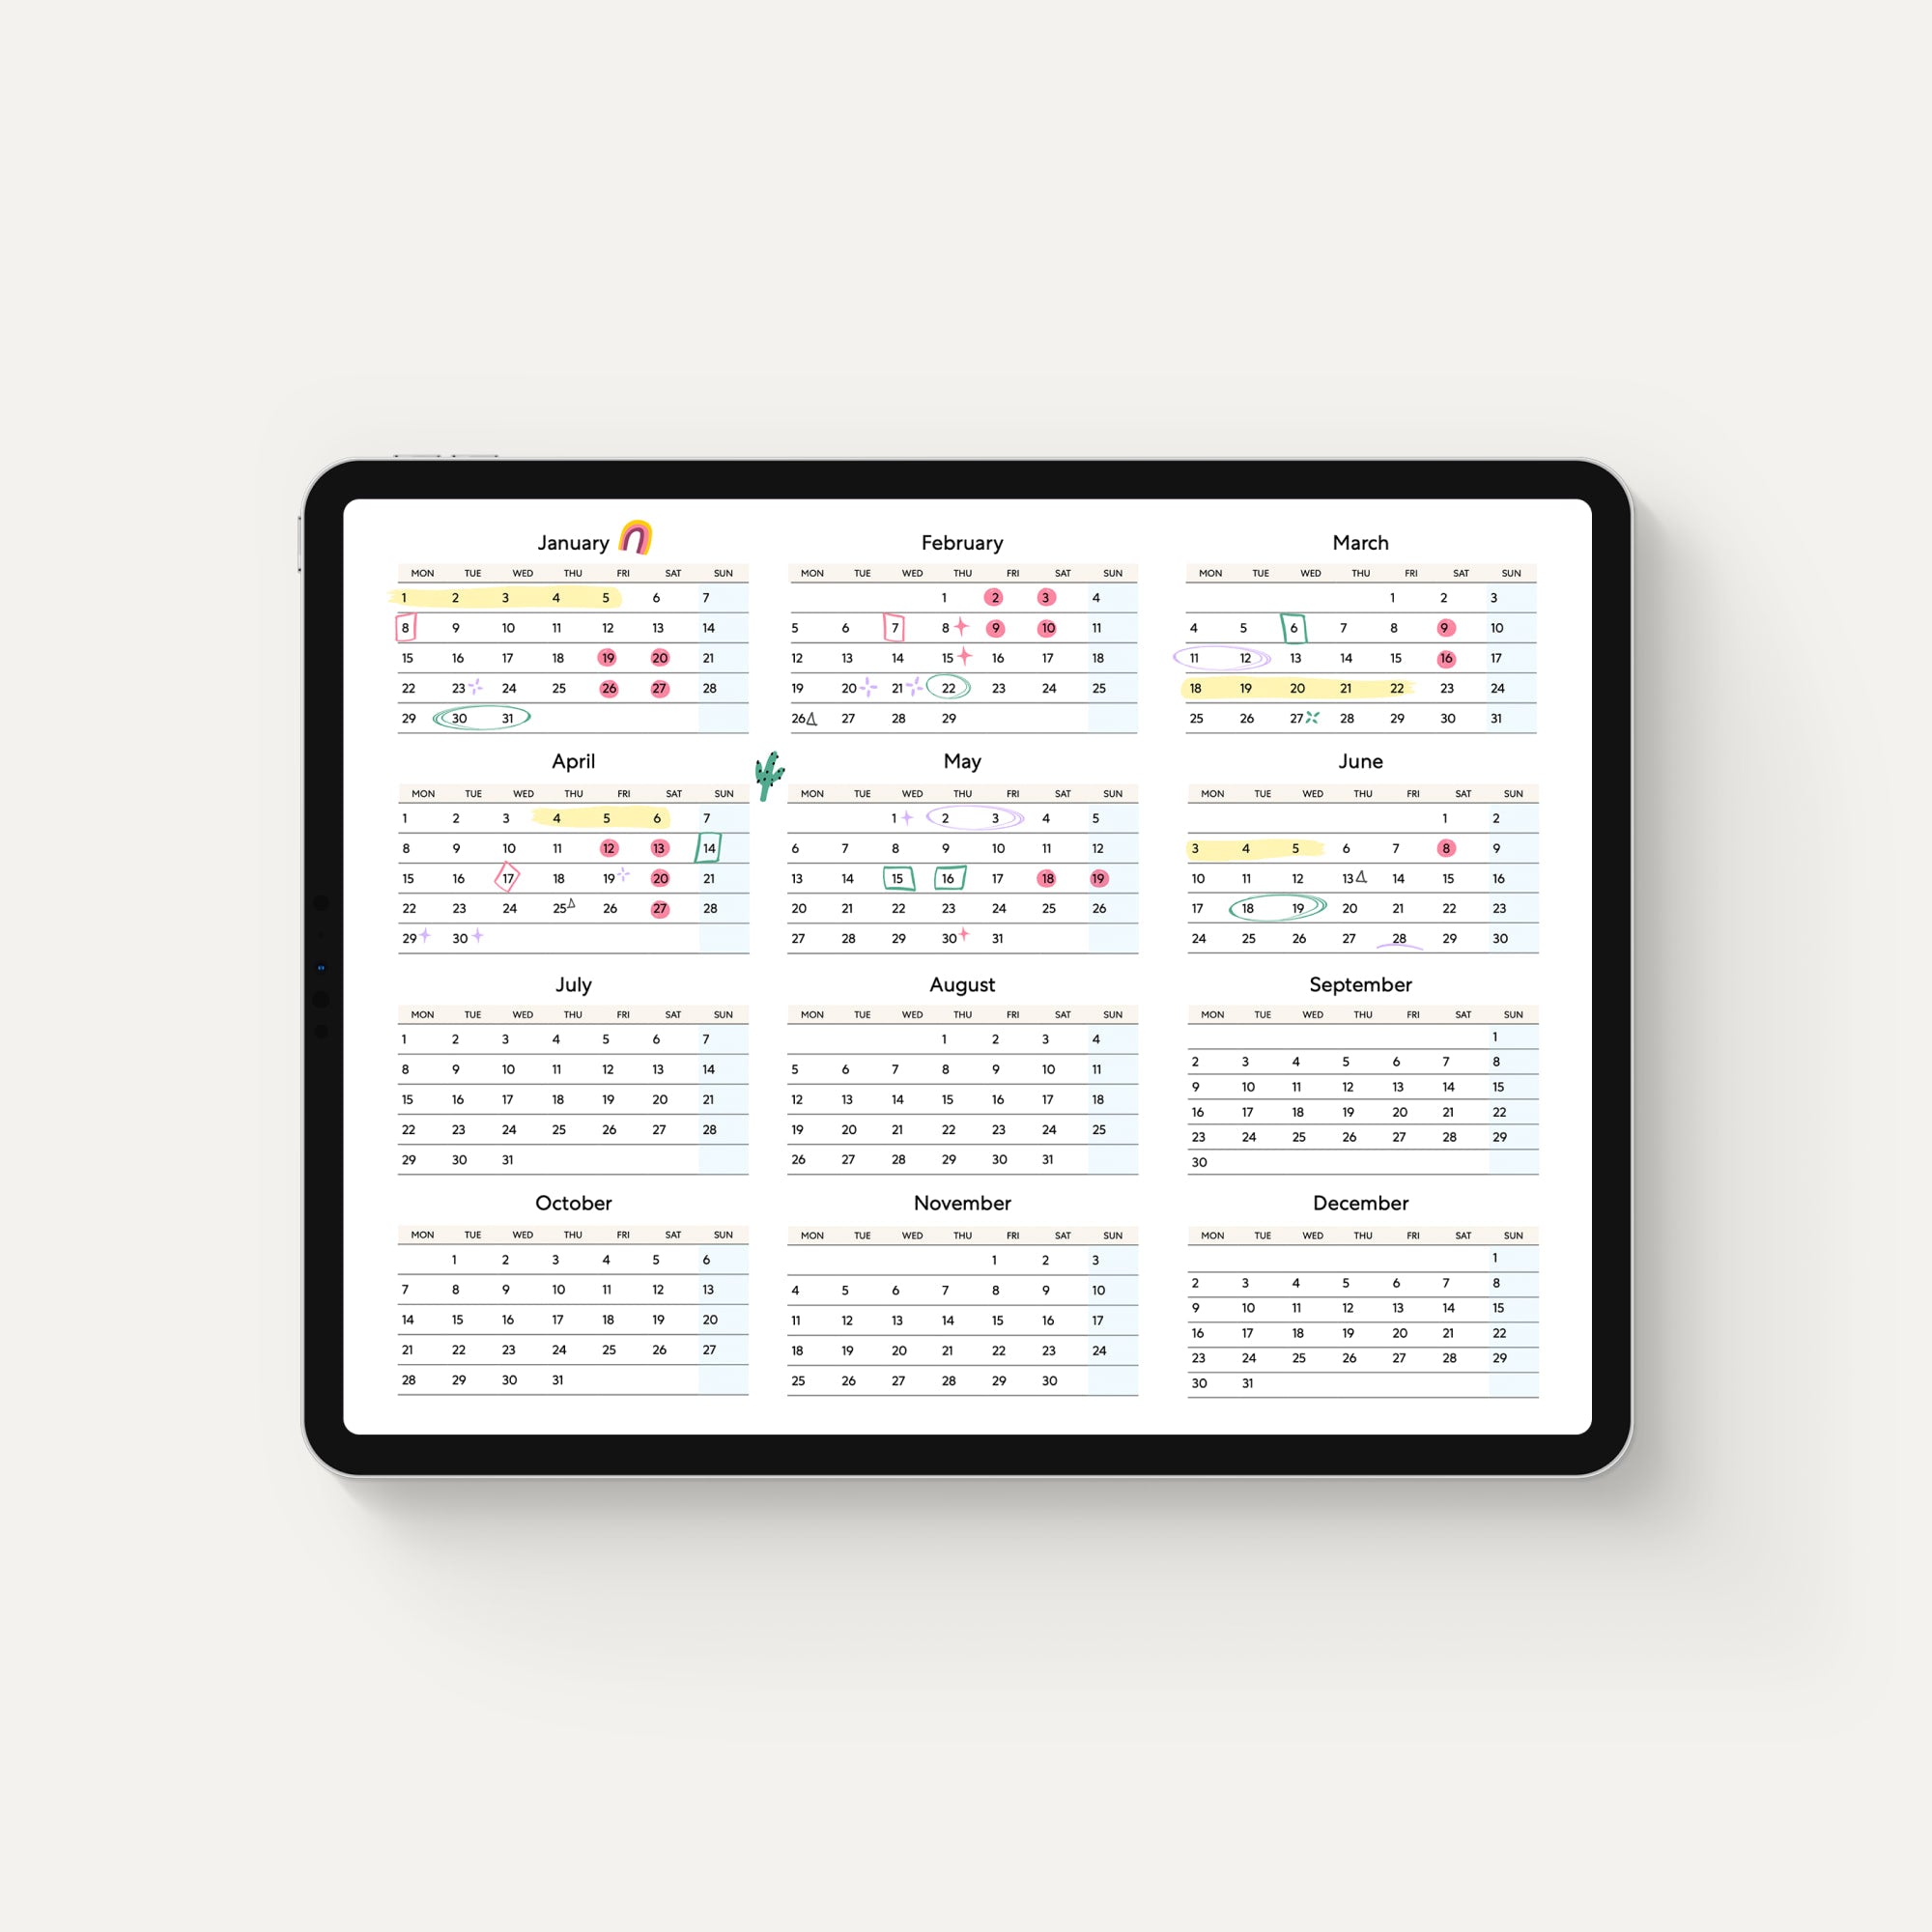 light mode of pro planner in full calendar year display